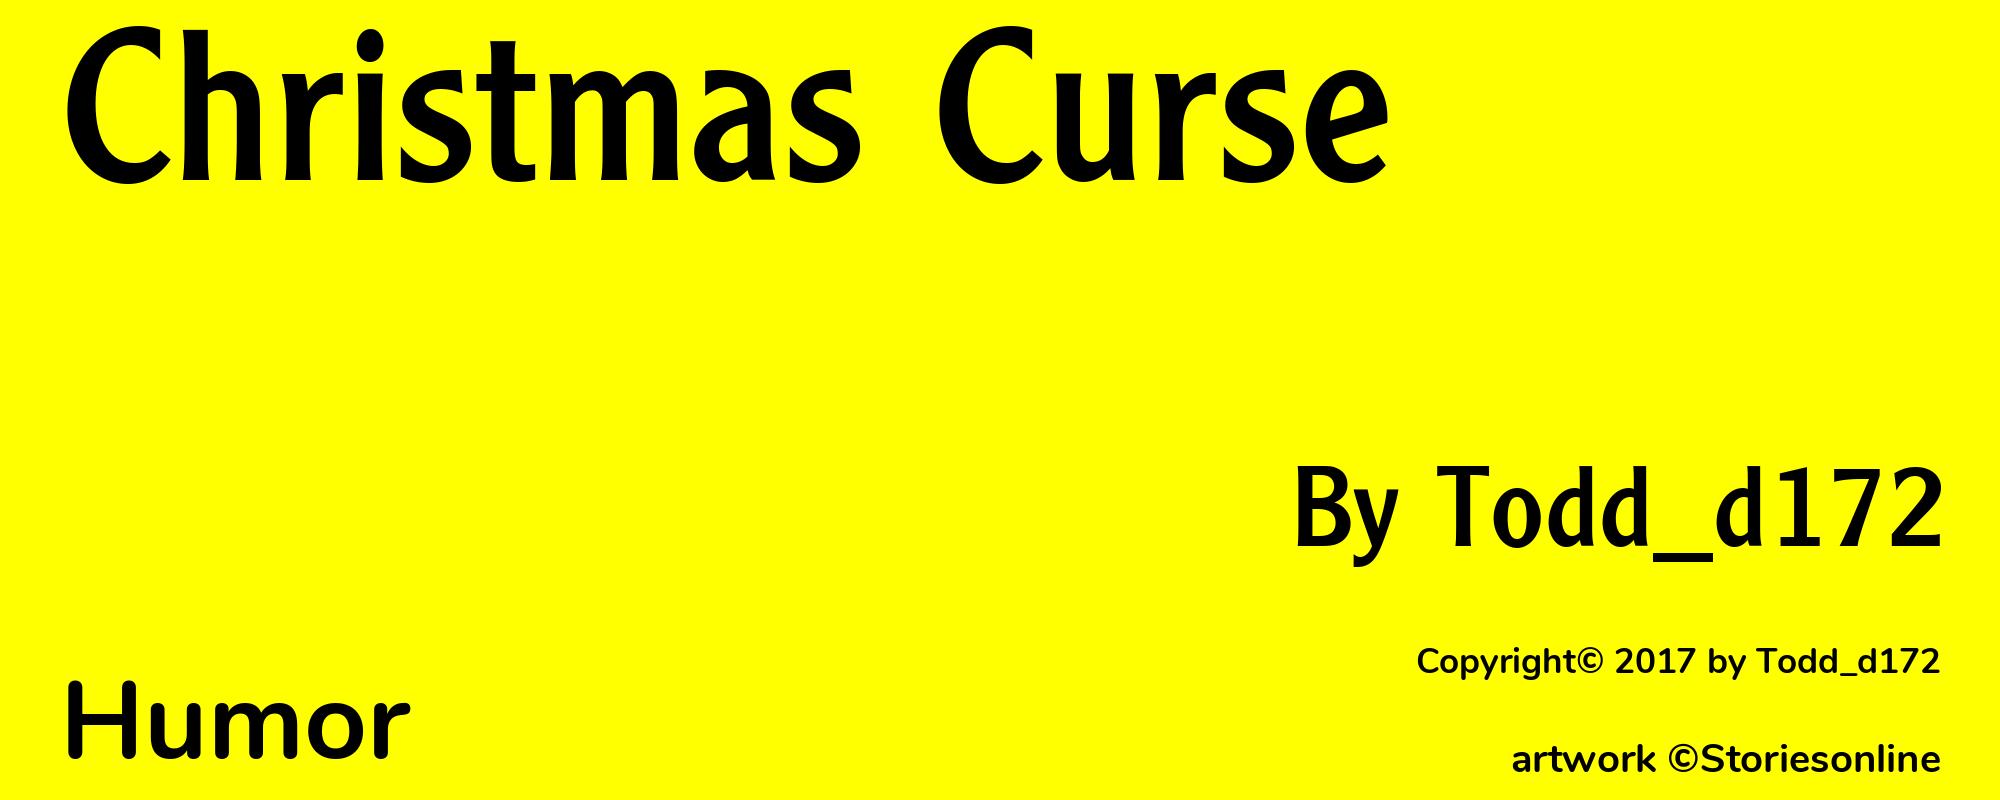 Christmas Curse - Cover